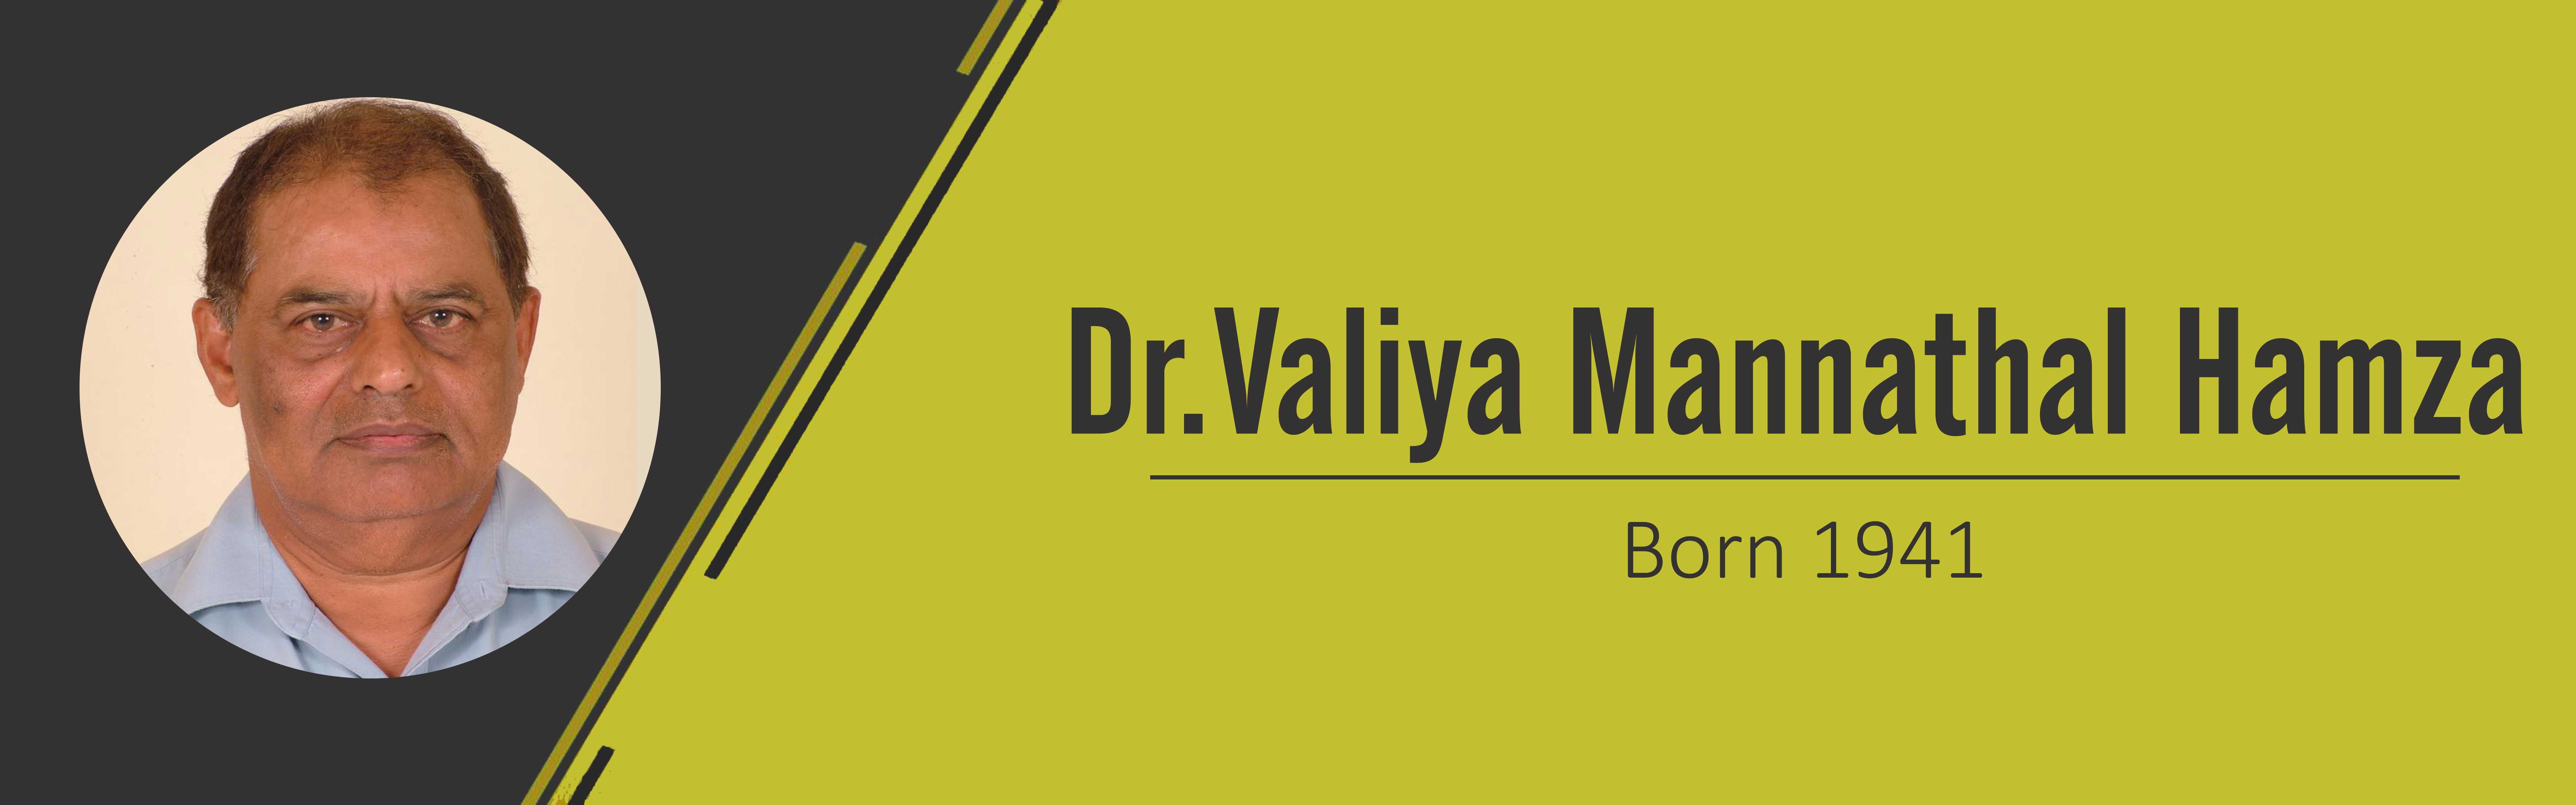 dr valiya mannathal hamza